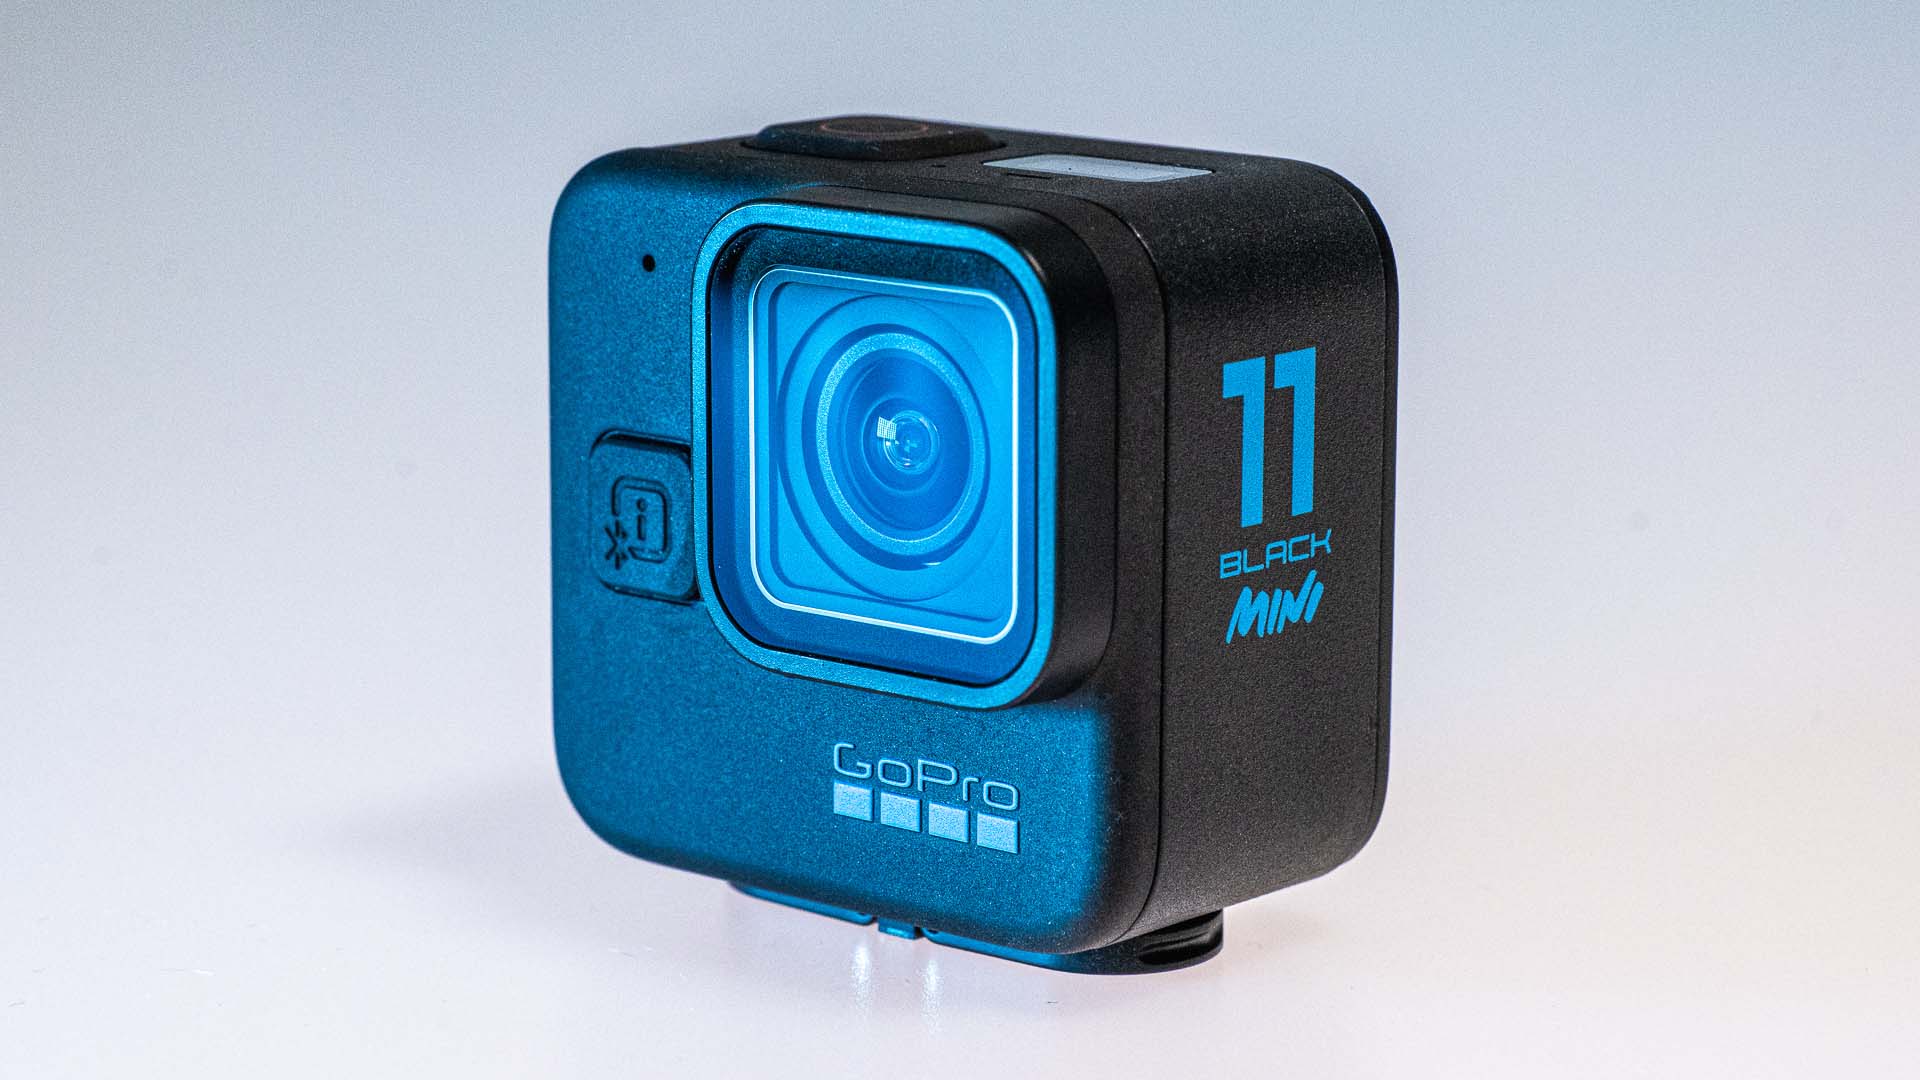 The GoPro HERO11 Black Mini